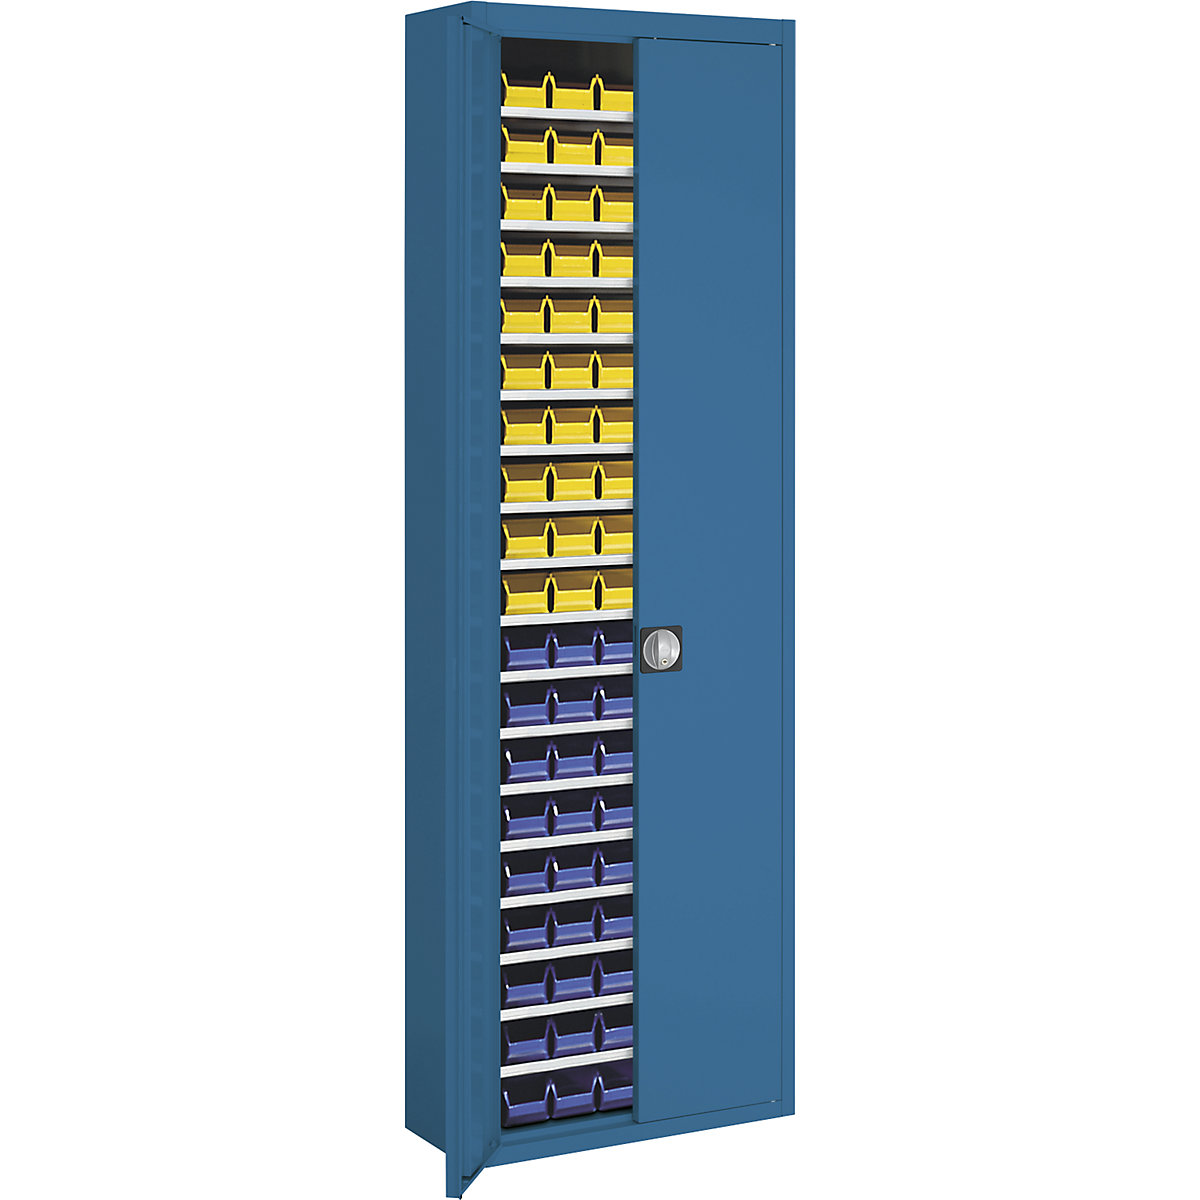 Storage cupboard with open fronted storage bins – mauser, HxWxD 2150 x 680 x 280 mm, single colour, blue, 114 bins-10